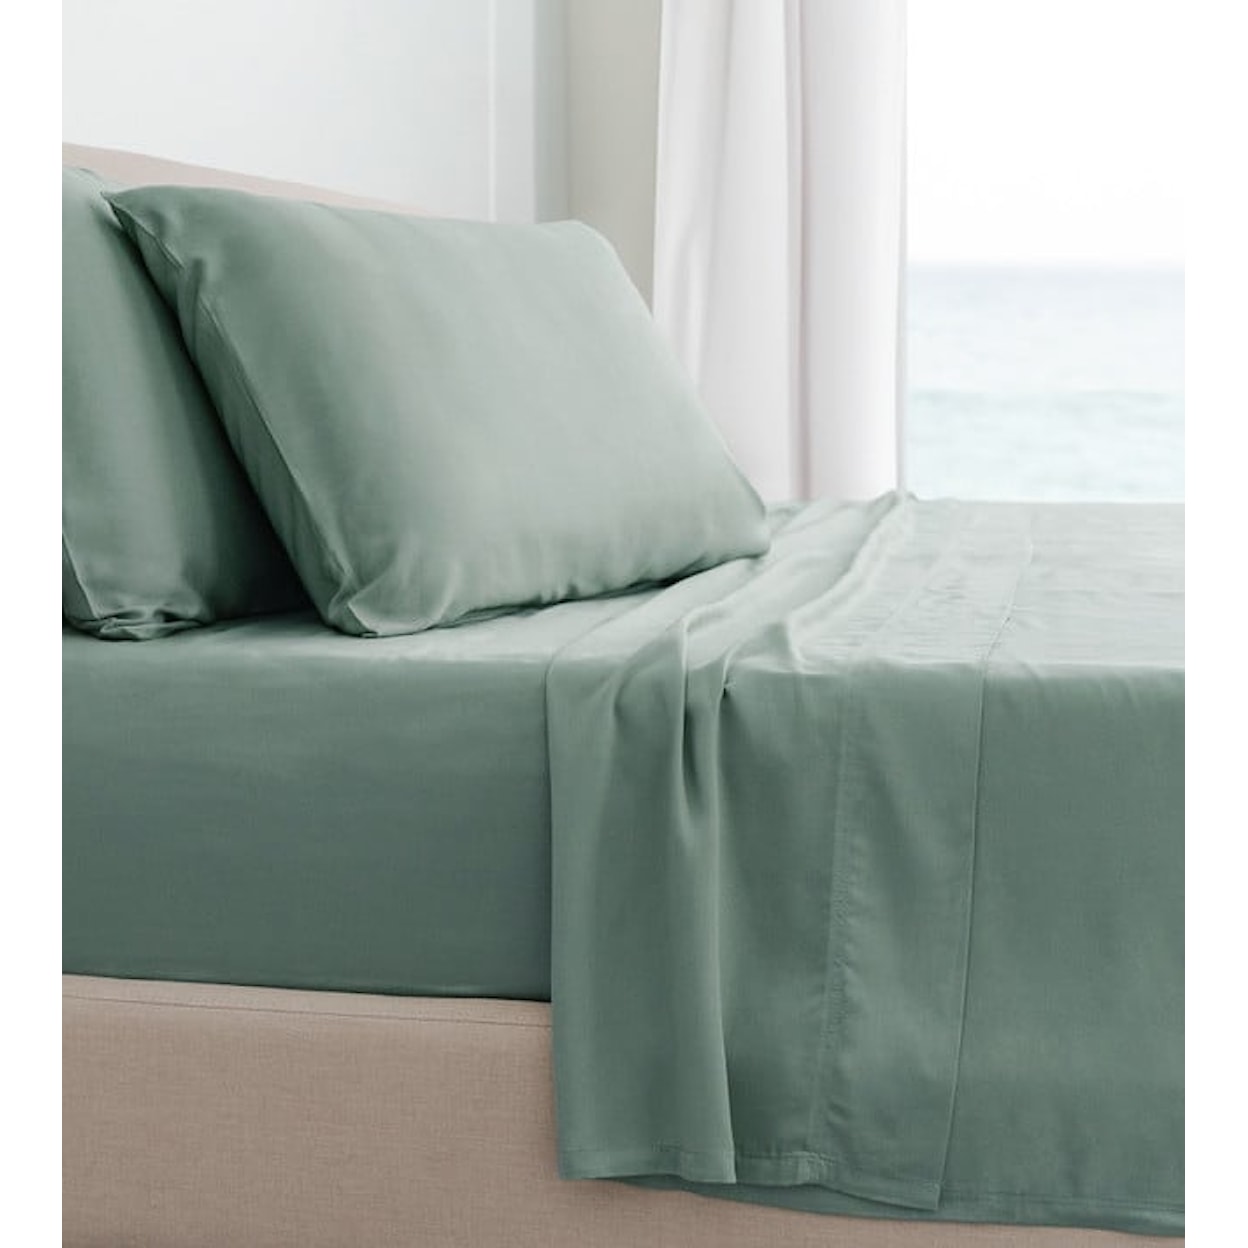 Cariloha Classic Bamboo Bed Sheet Set Set of Standard Pillowcases in Tahitian